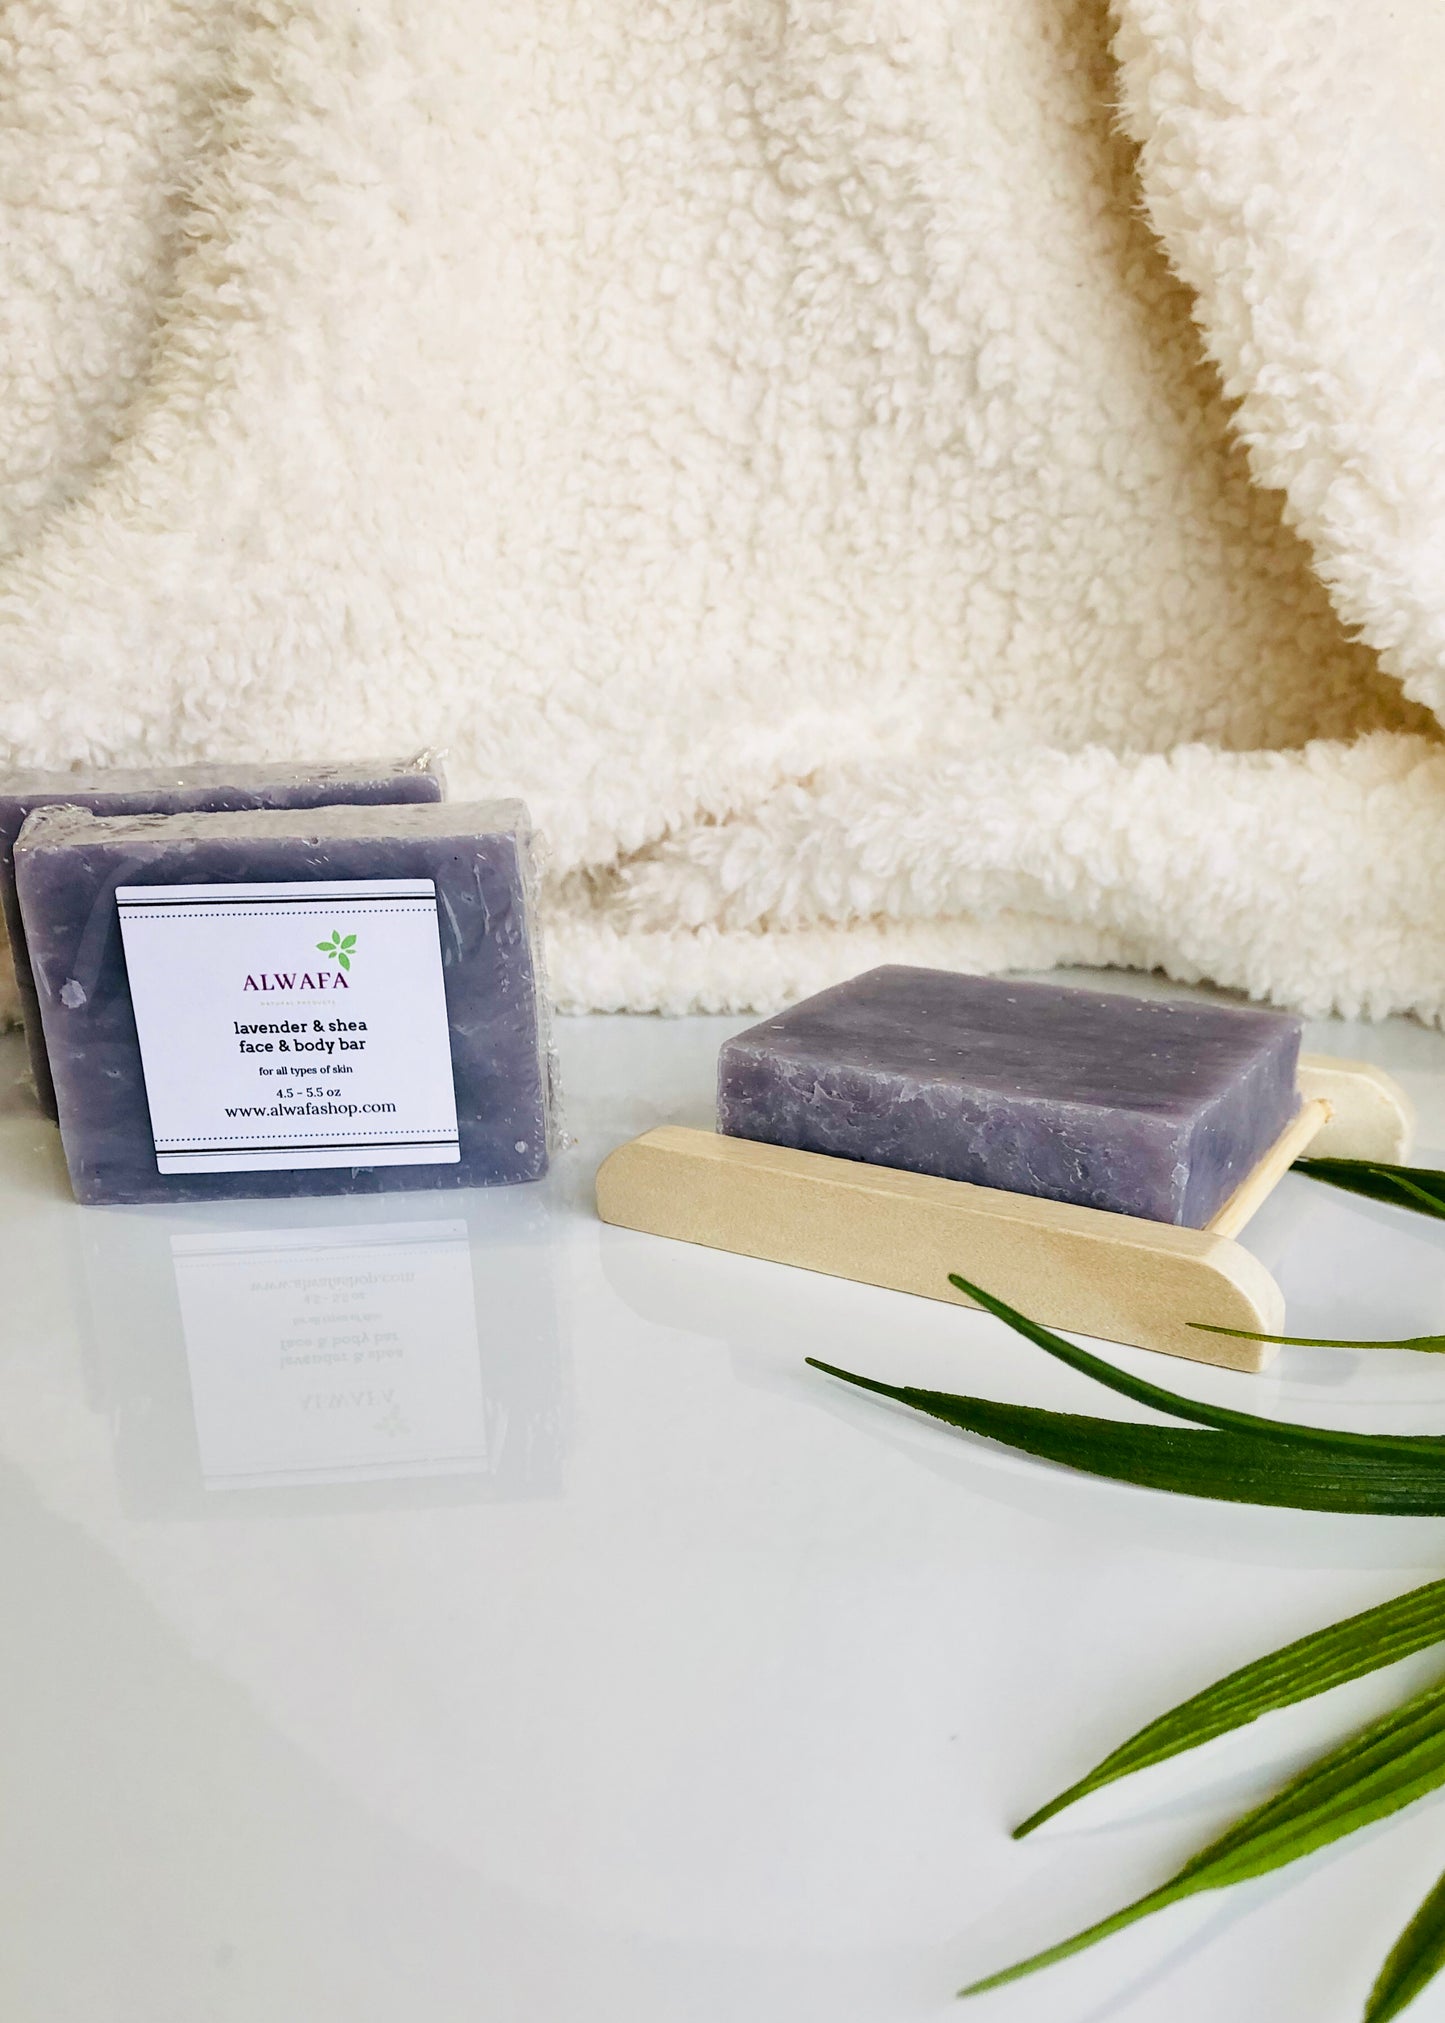 Lavender & shea soap